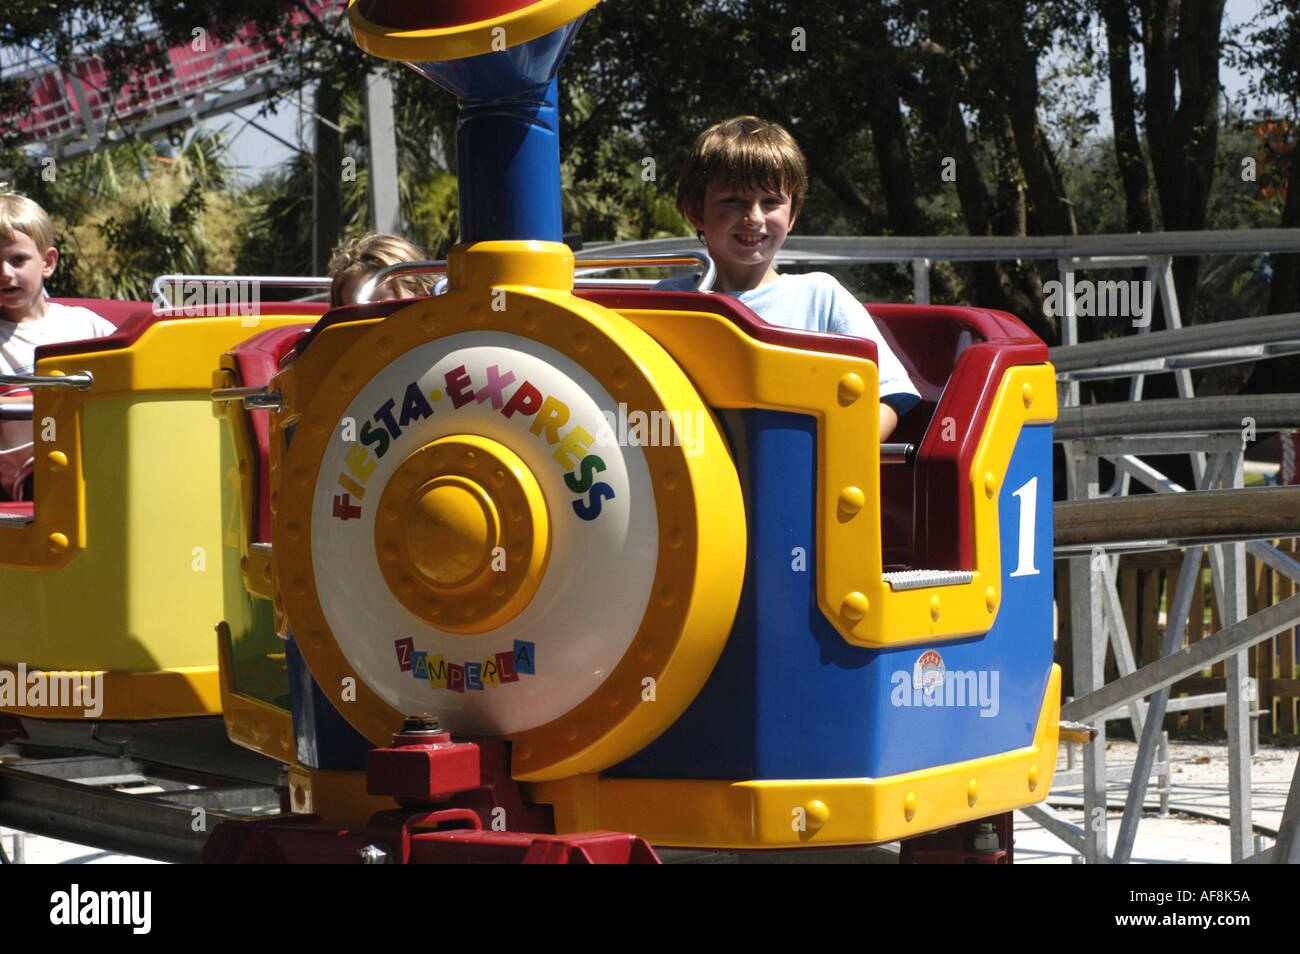 Cypress Gardens Adventure Park Florida Fl Winter Haven Florida attractions children on colorful train ride Stock Photo